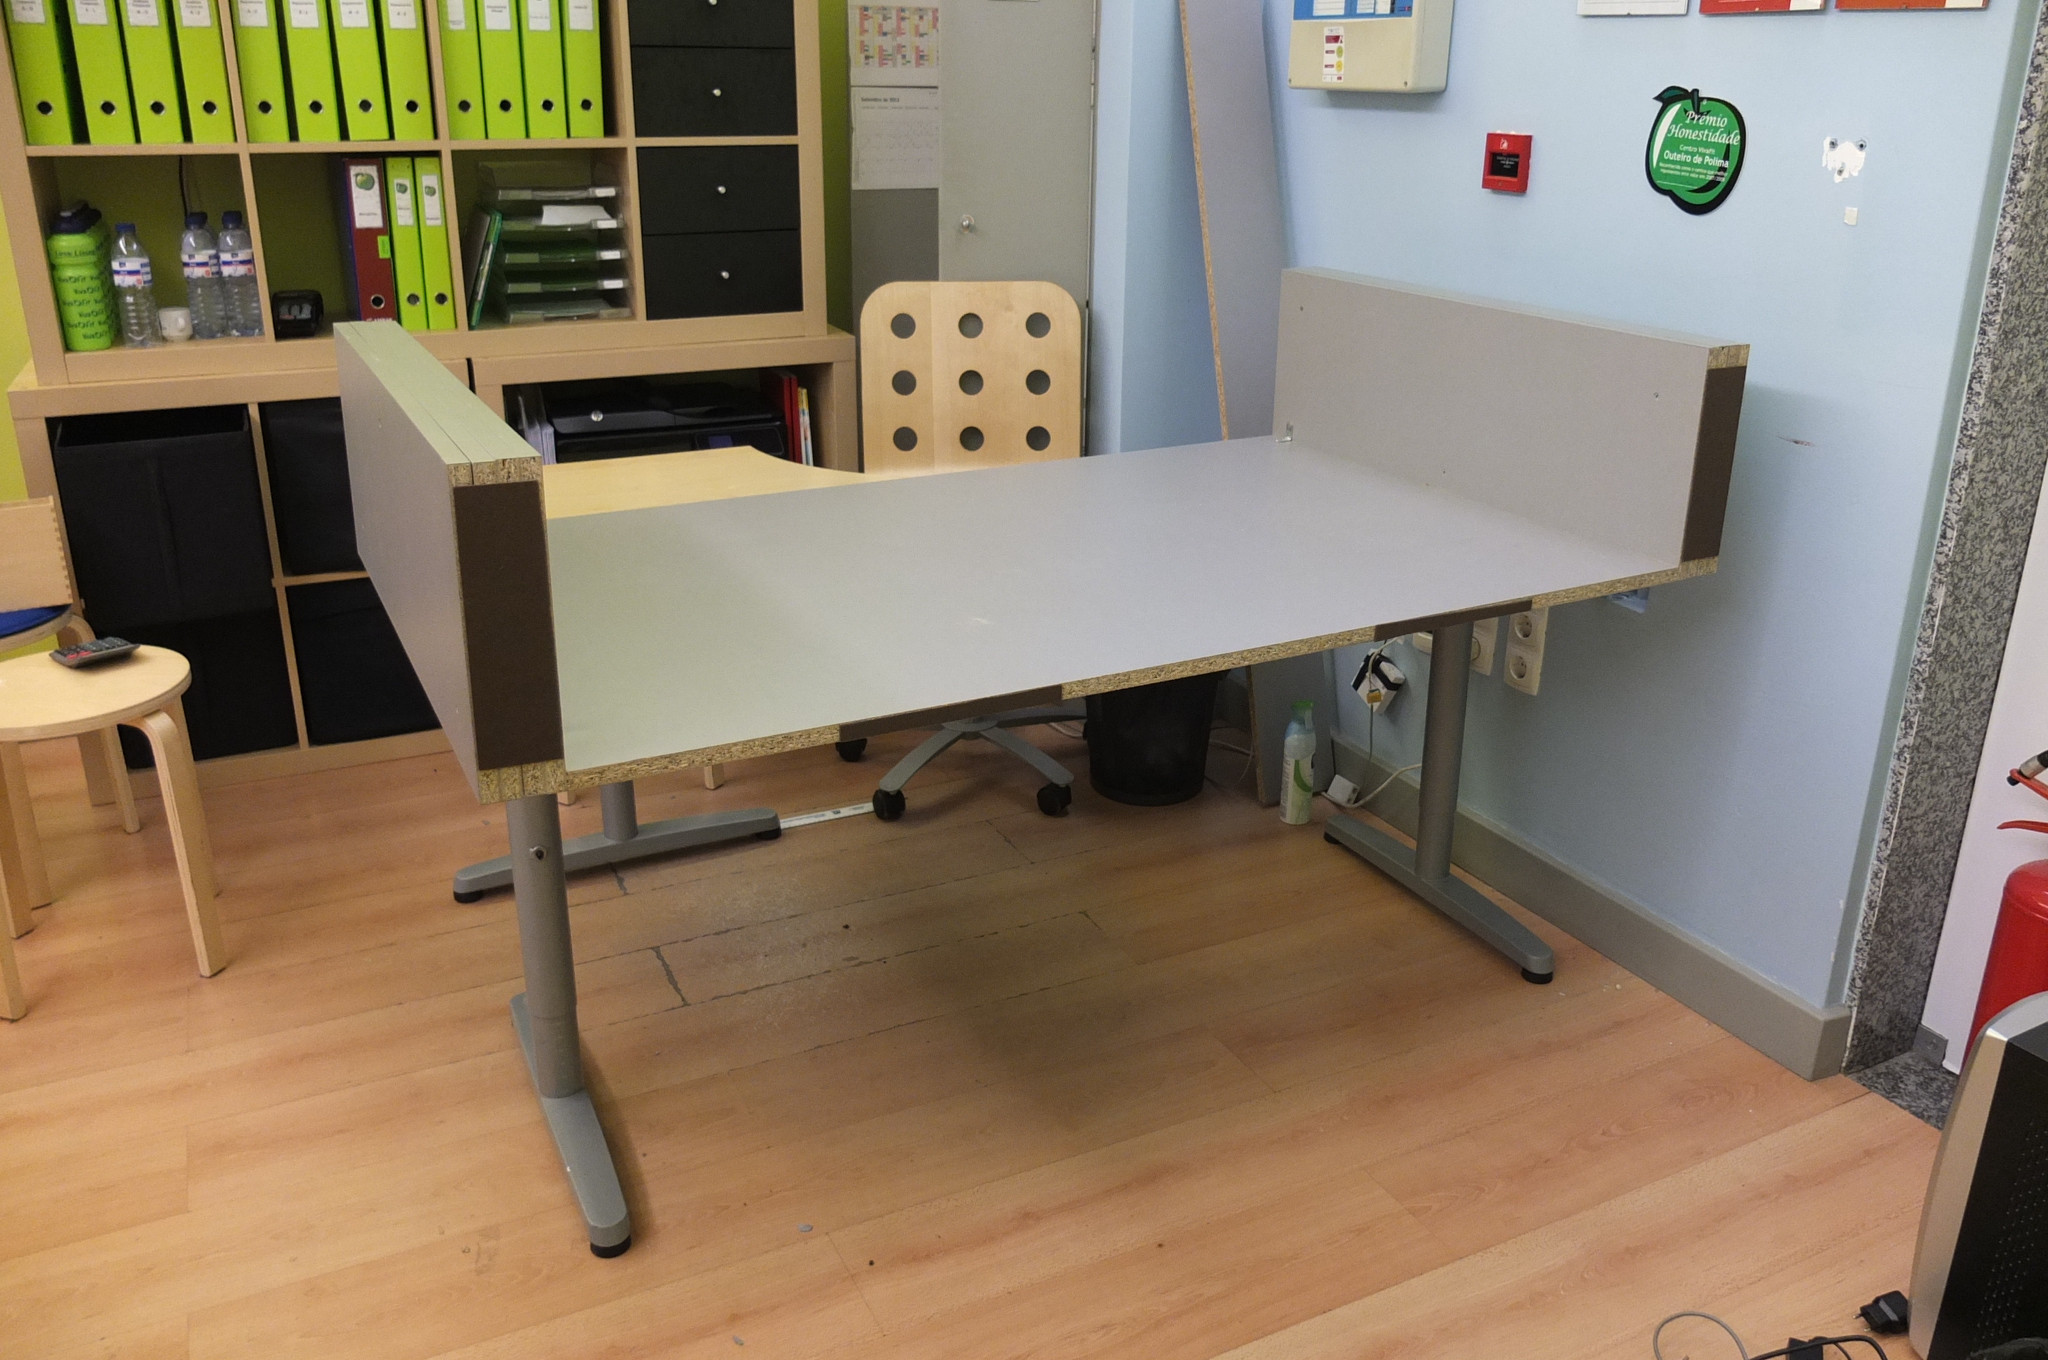 Best ideas about DIY Reception Desk
. Save or Pin diyreceptiondesk13 Now.